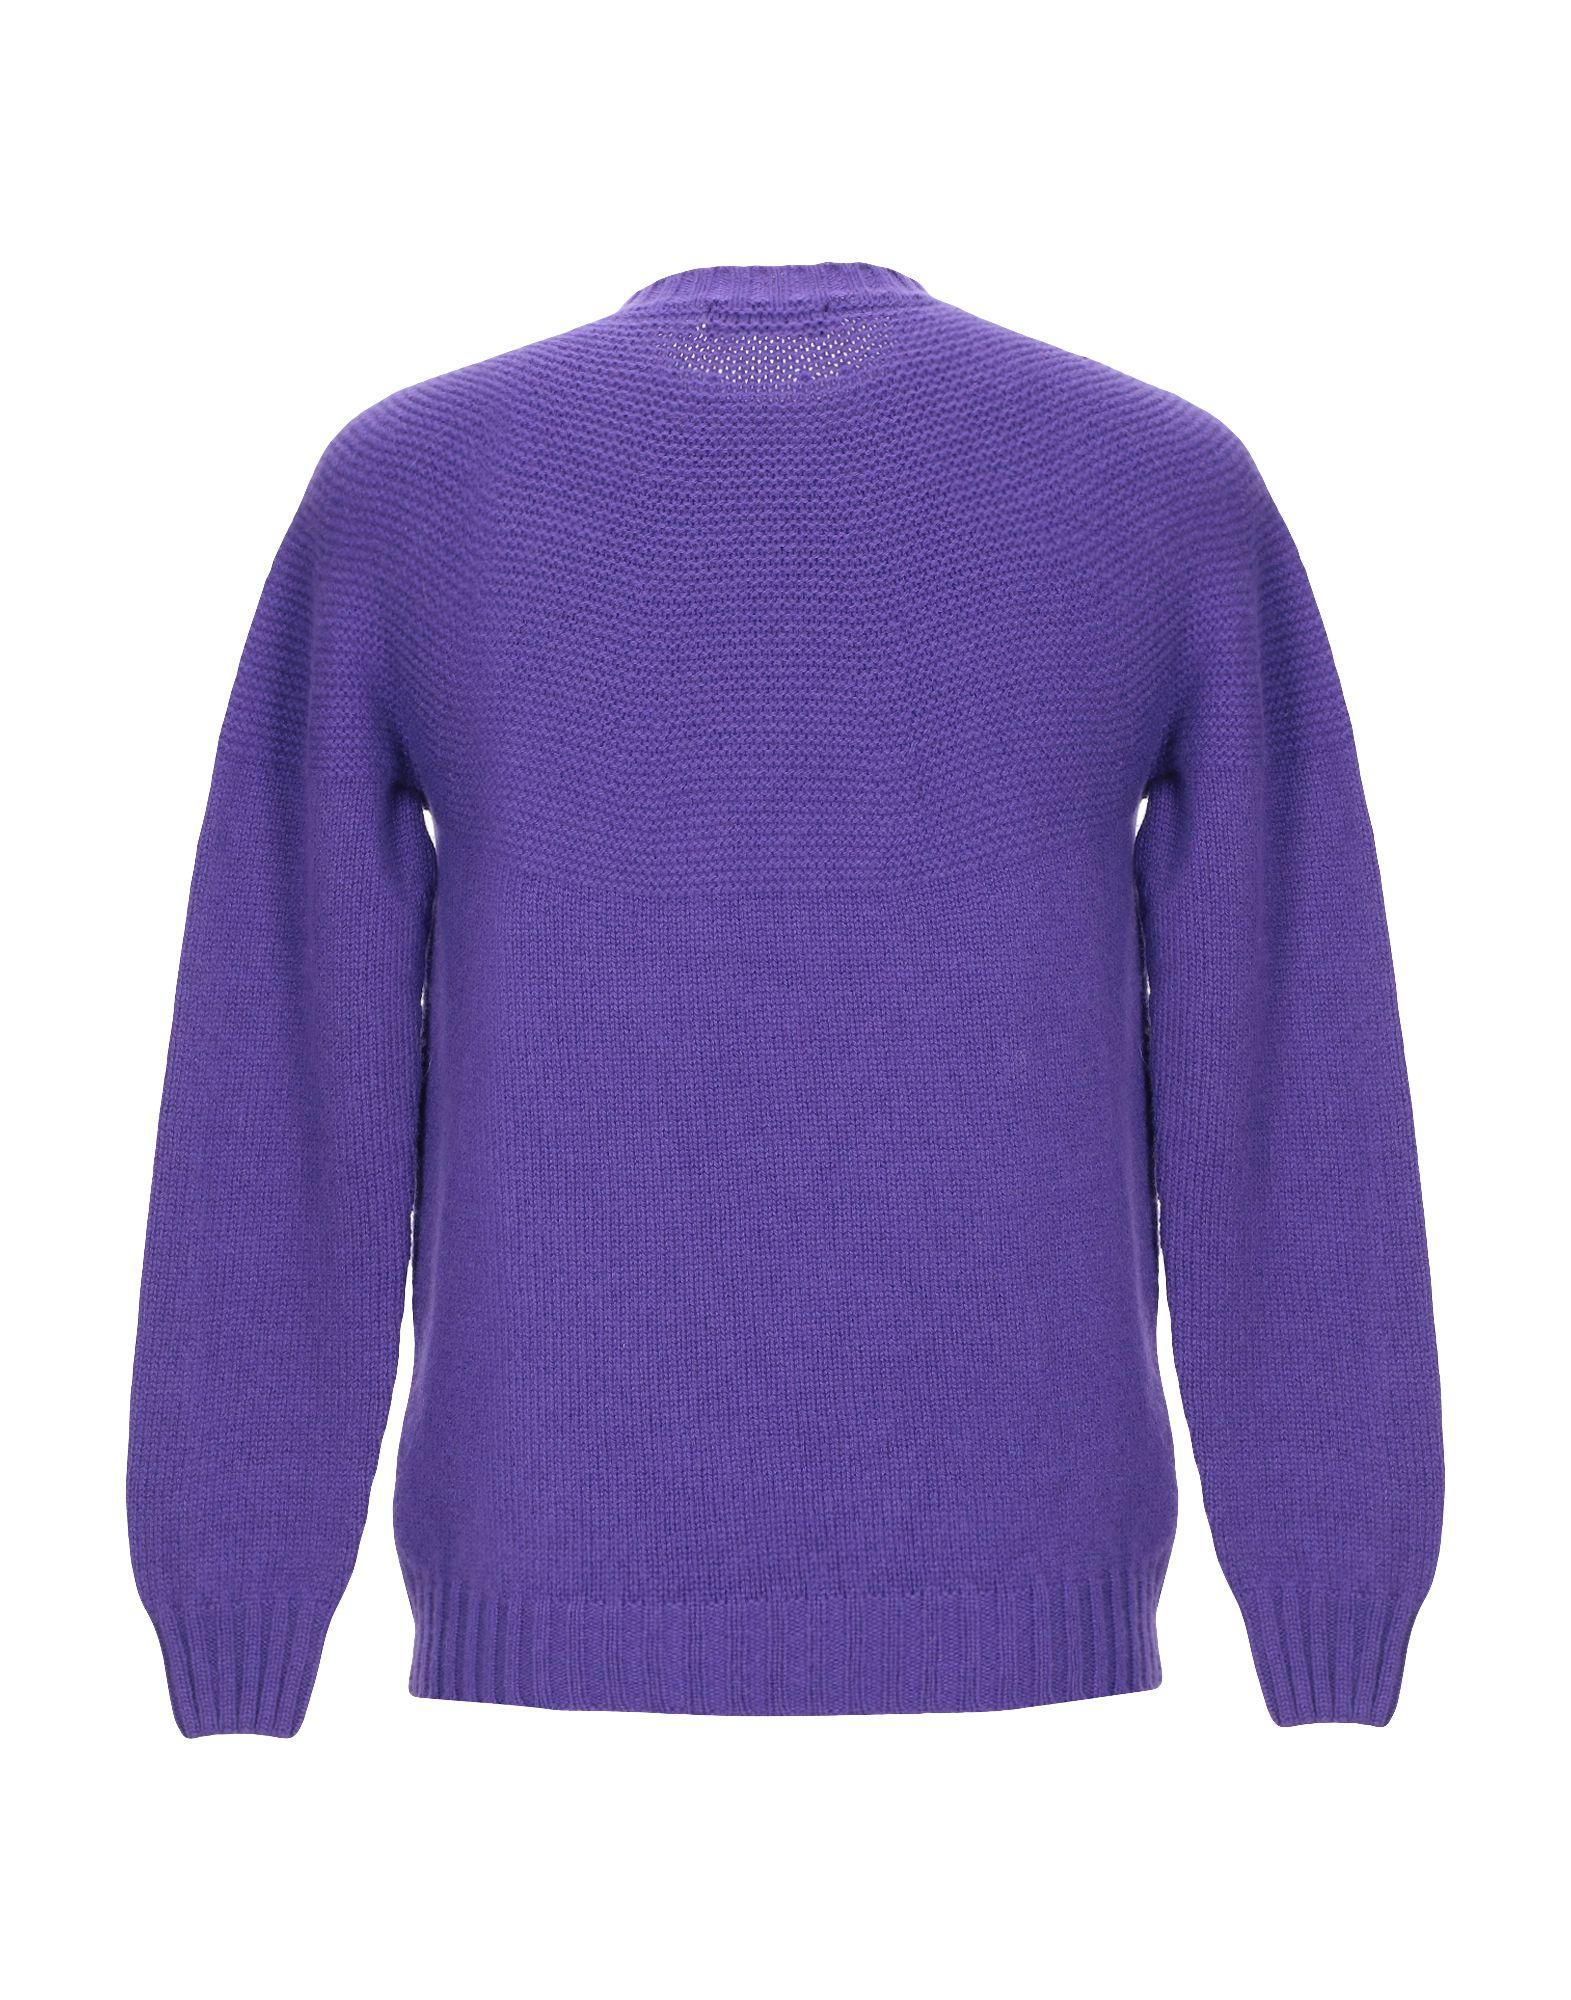 Drumohr Wool Jumper in Purple for Men - Lyst